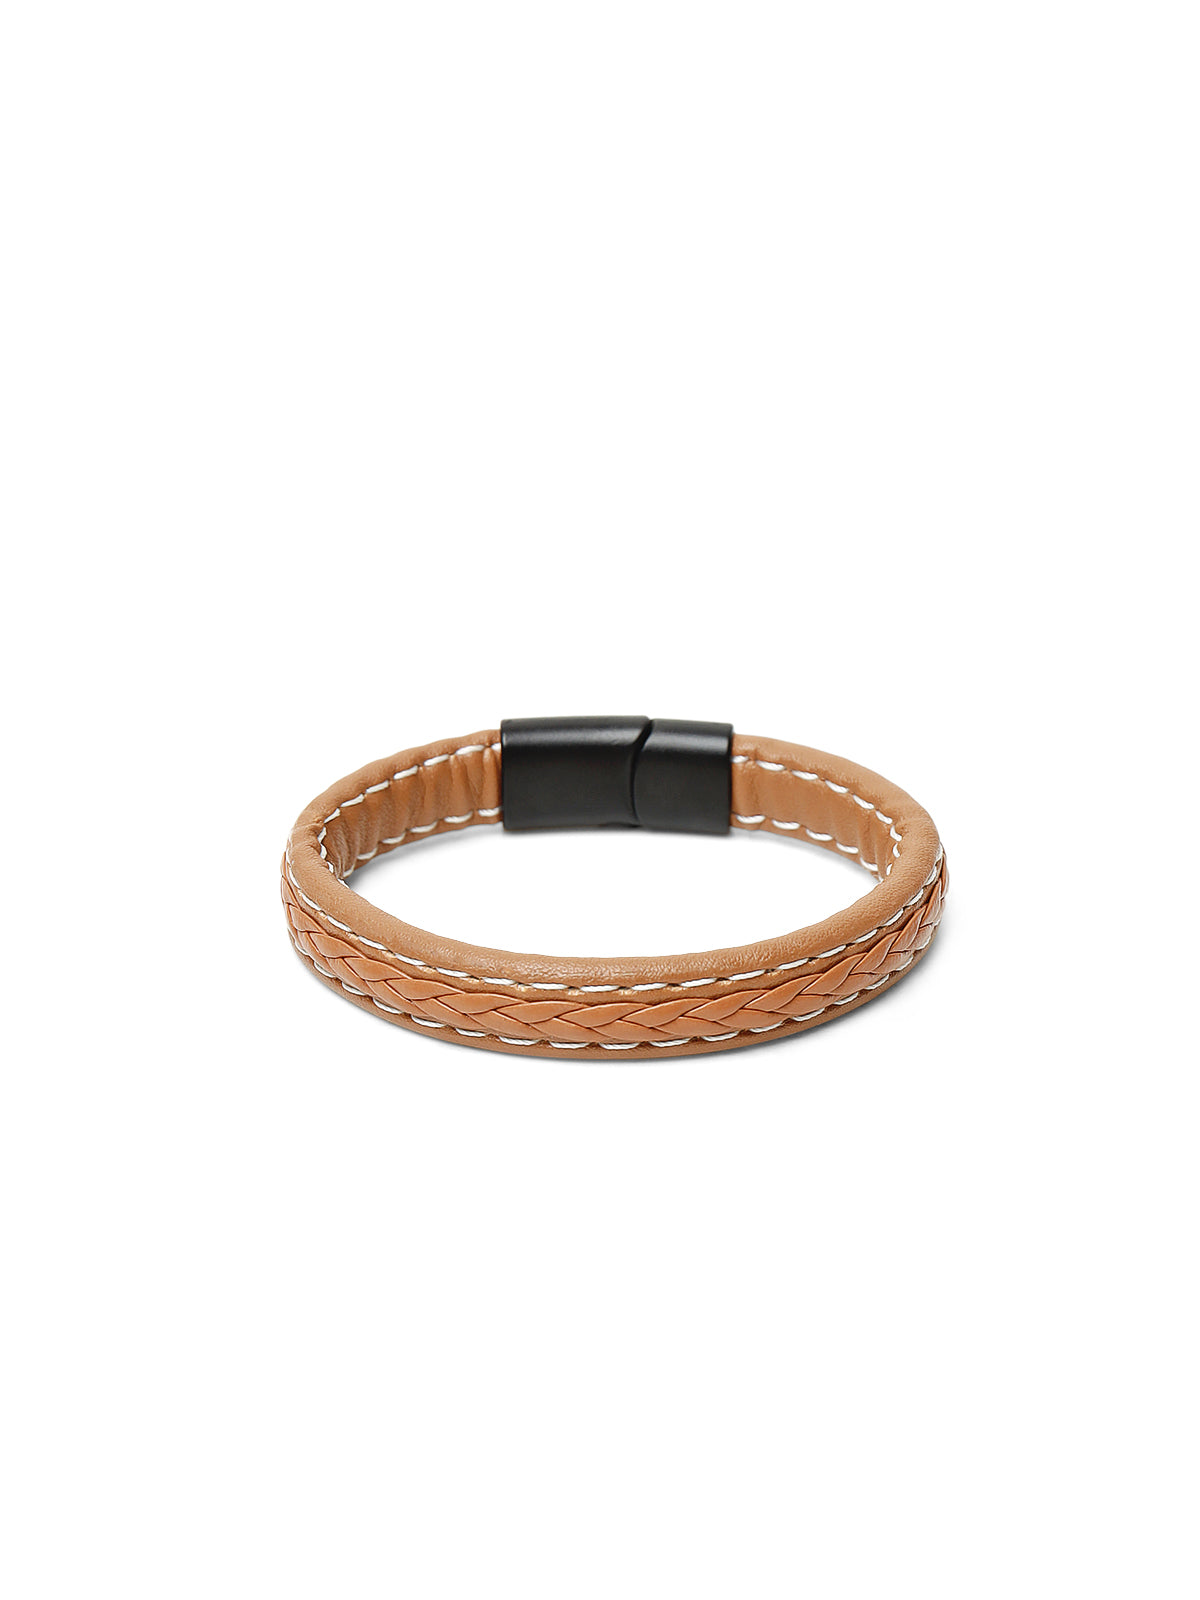 Brown Leather Bracelet - FABR24-018